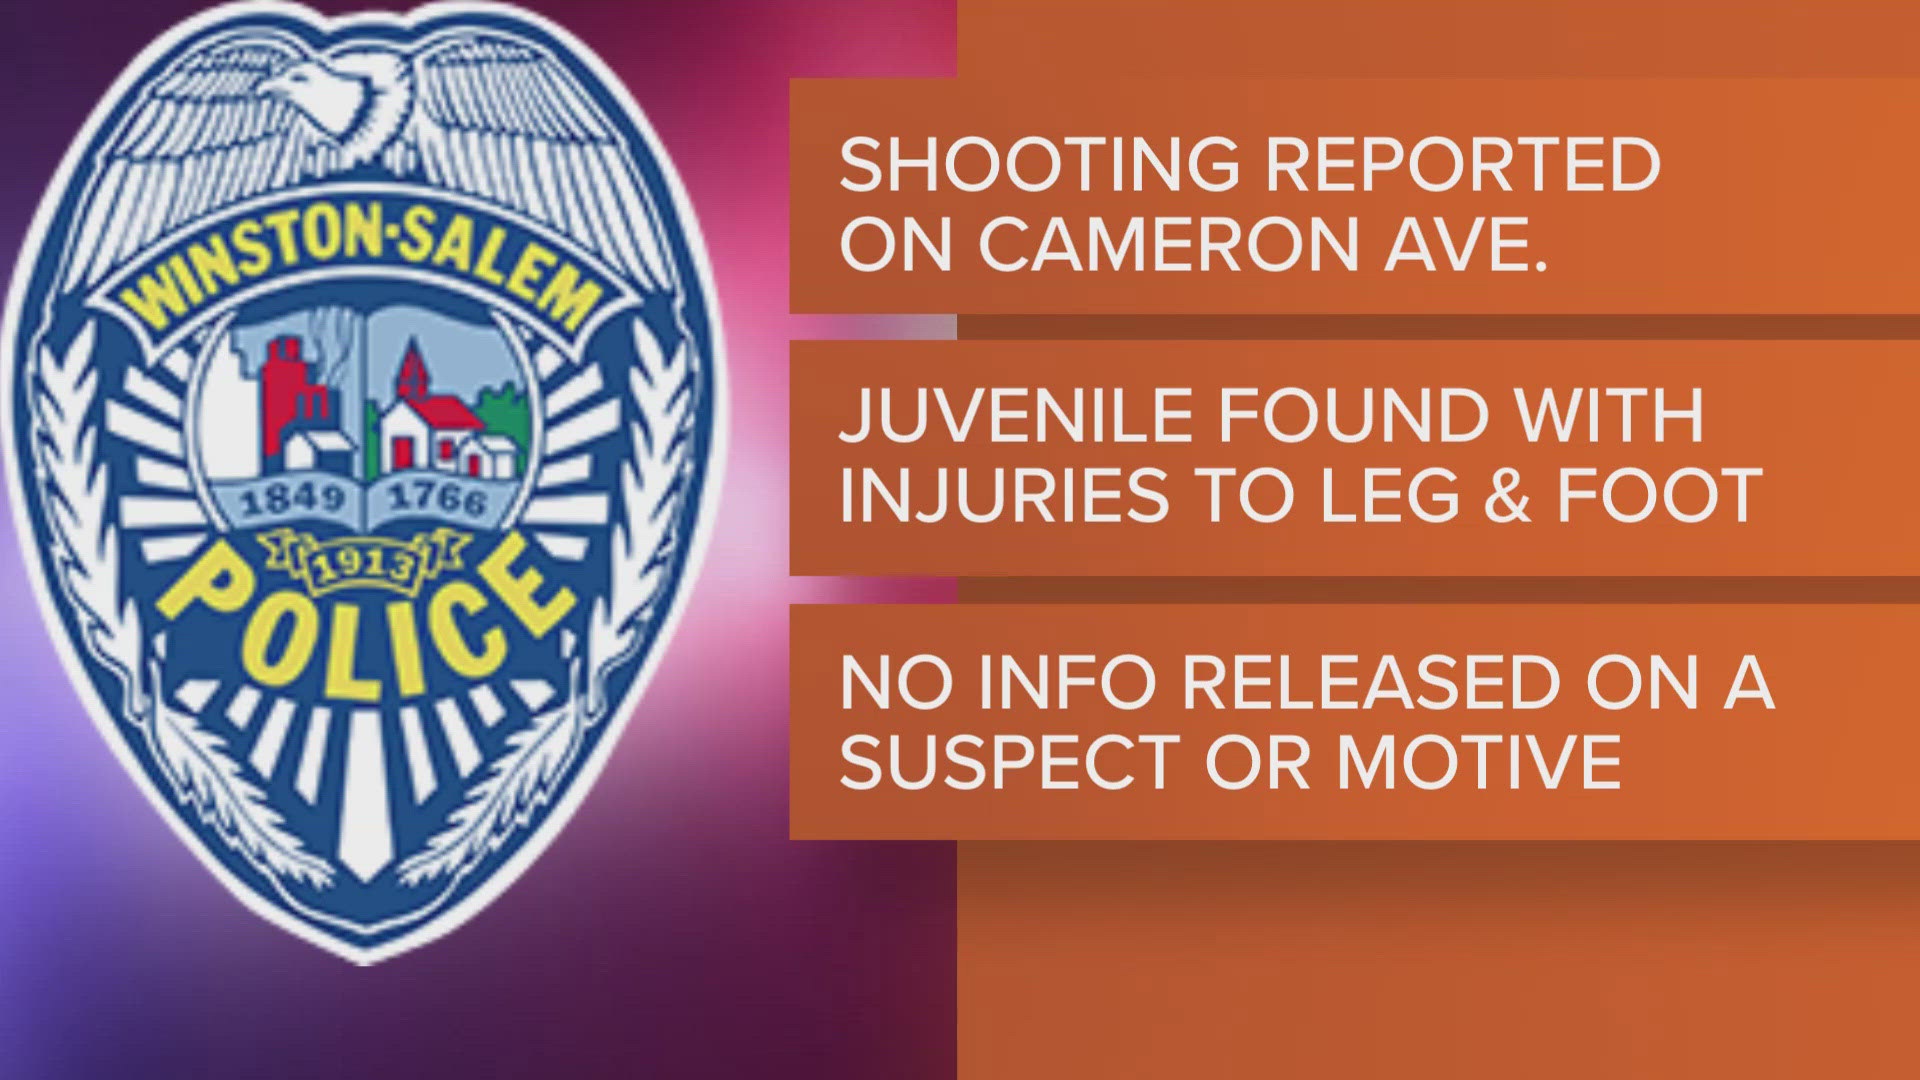 Police say it happened around 11:40 p.m. on Cameron Avenue.